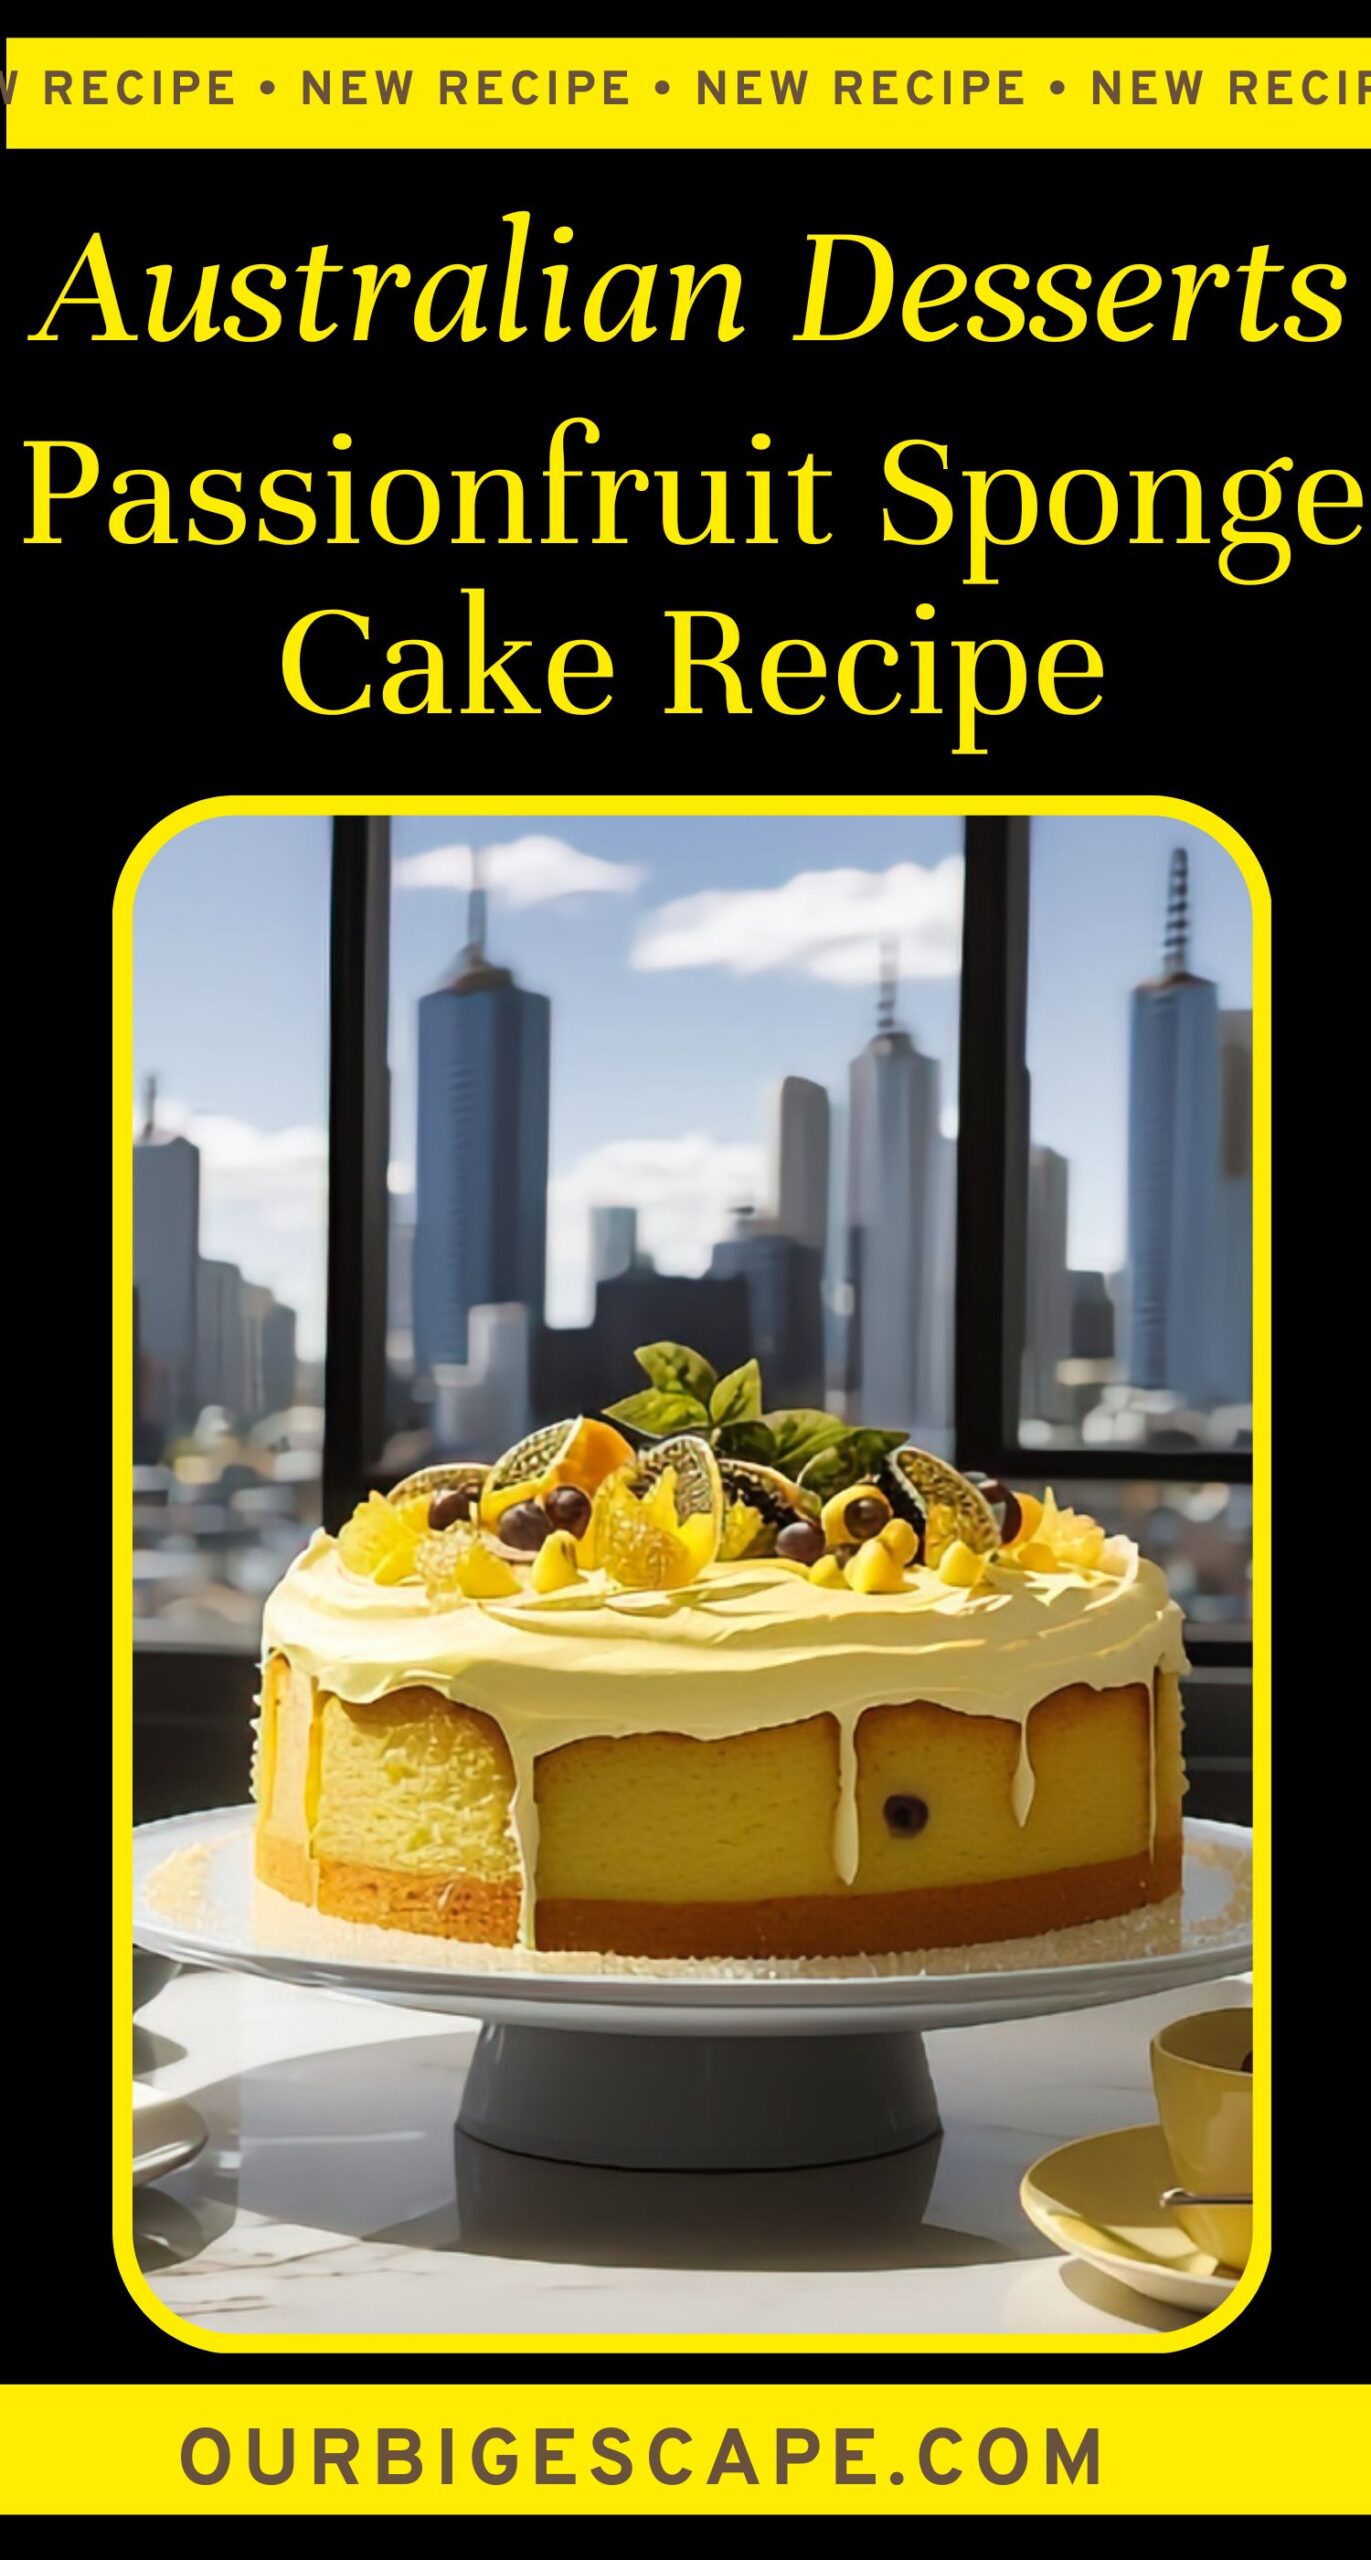 10. Australian Passionfruit Sponge Cake Recipe